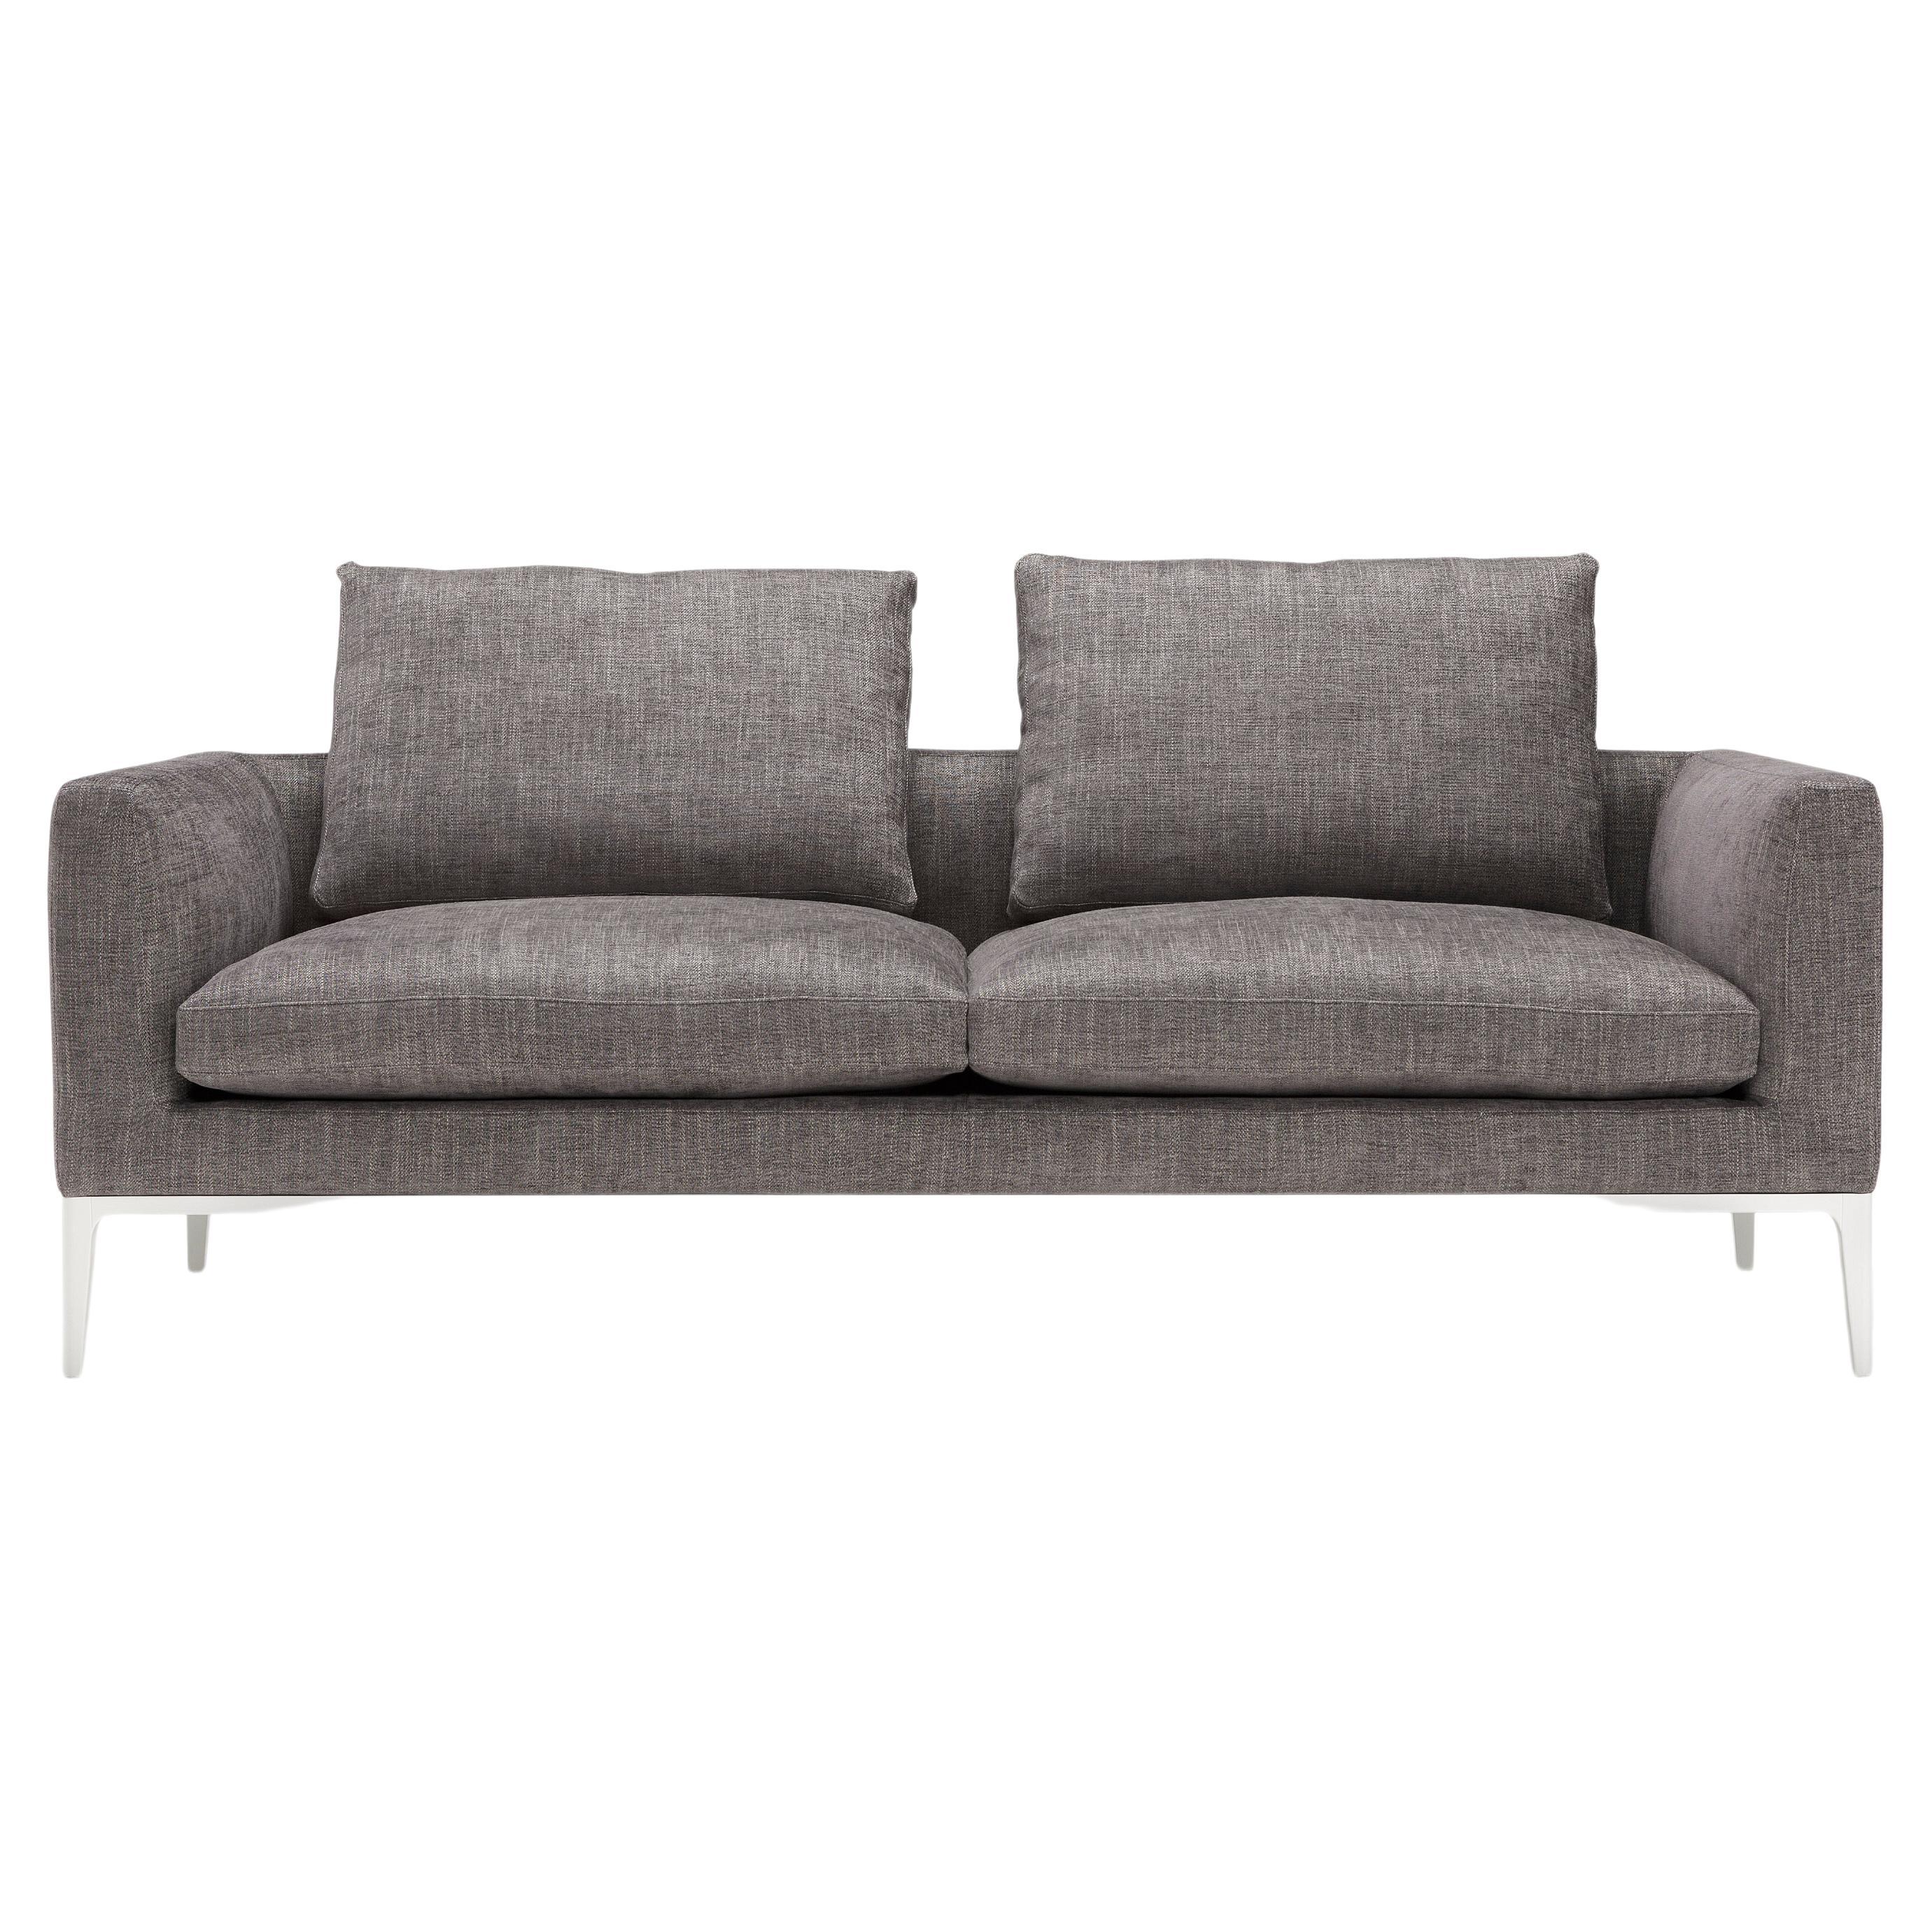 Amura 'Leonard' 2-Seat Sofa in Charcoal Fabric and Metal Legs by Emanuel Gargano For Sale